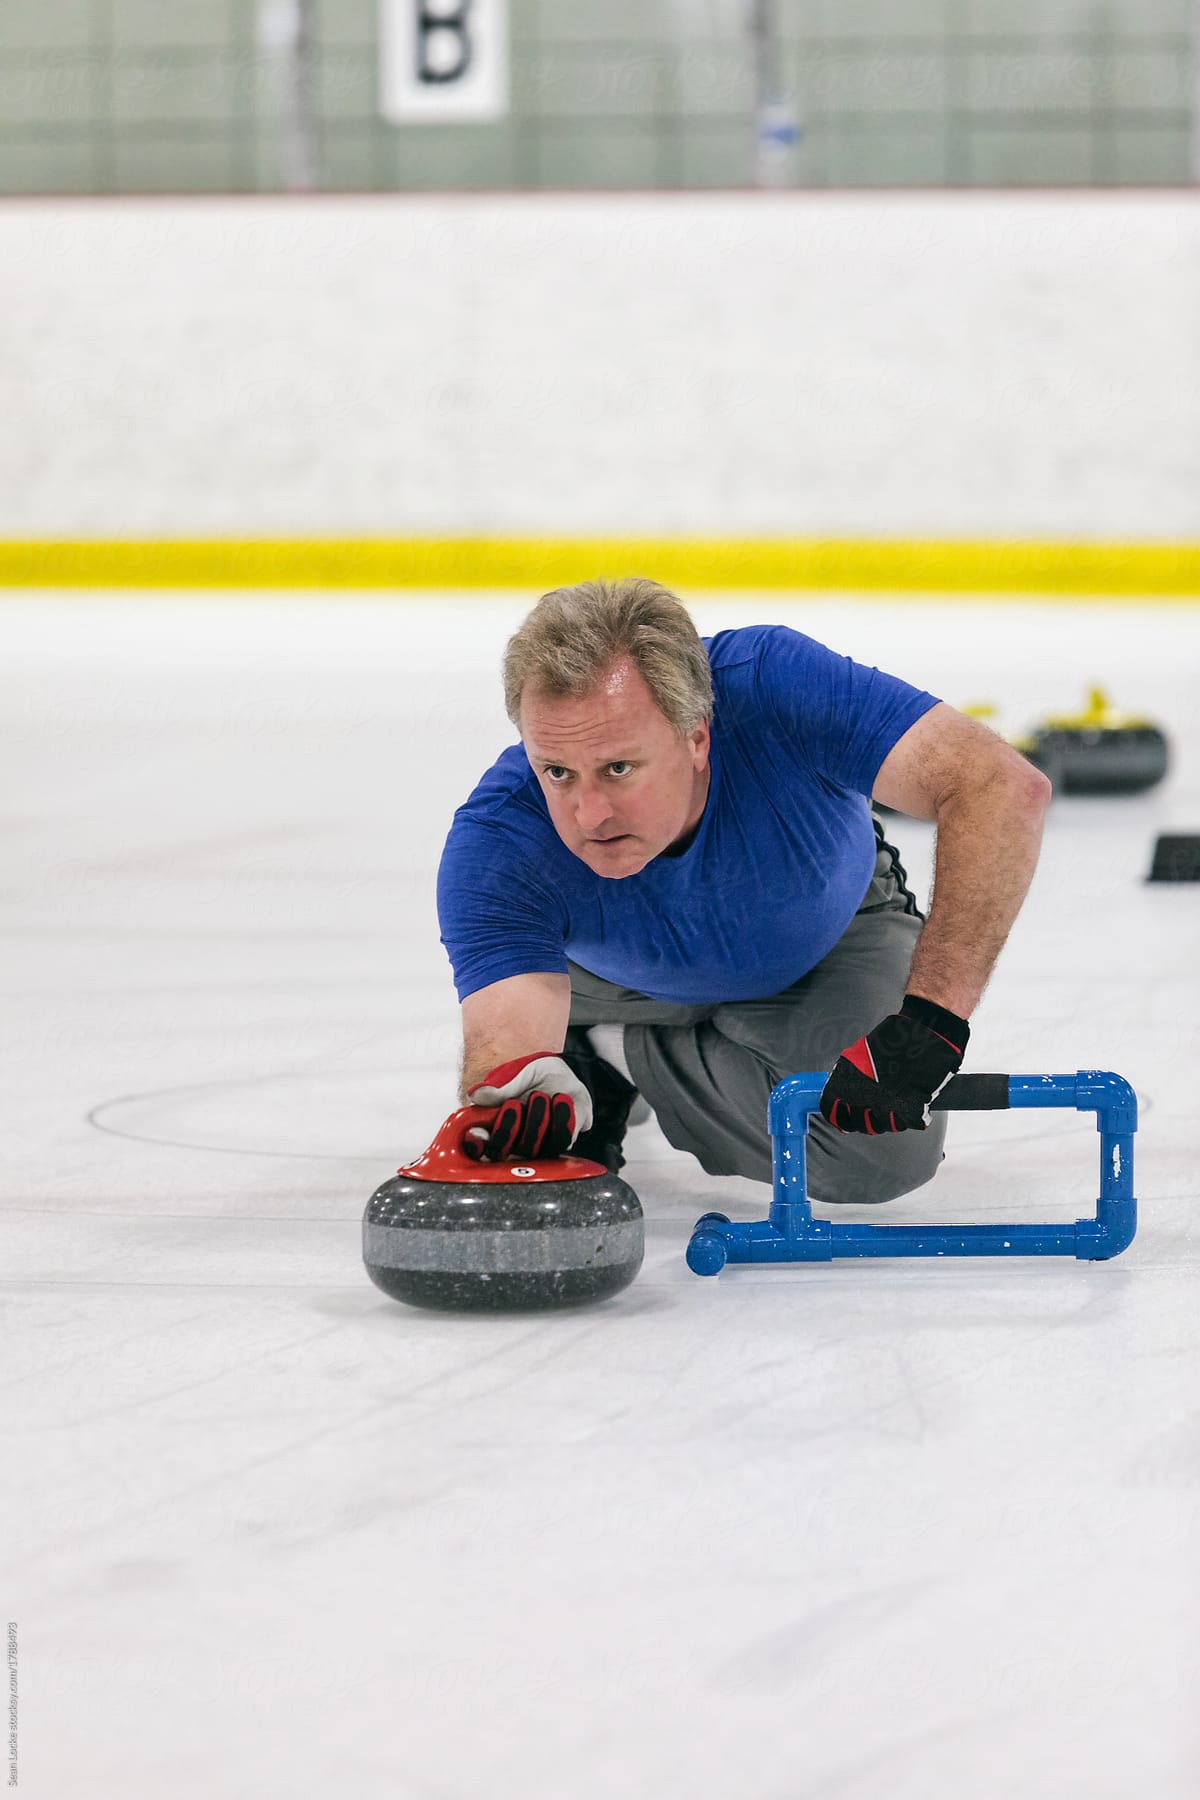 Curling: Man Throwing Stone During Game Play